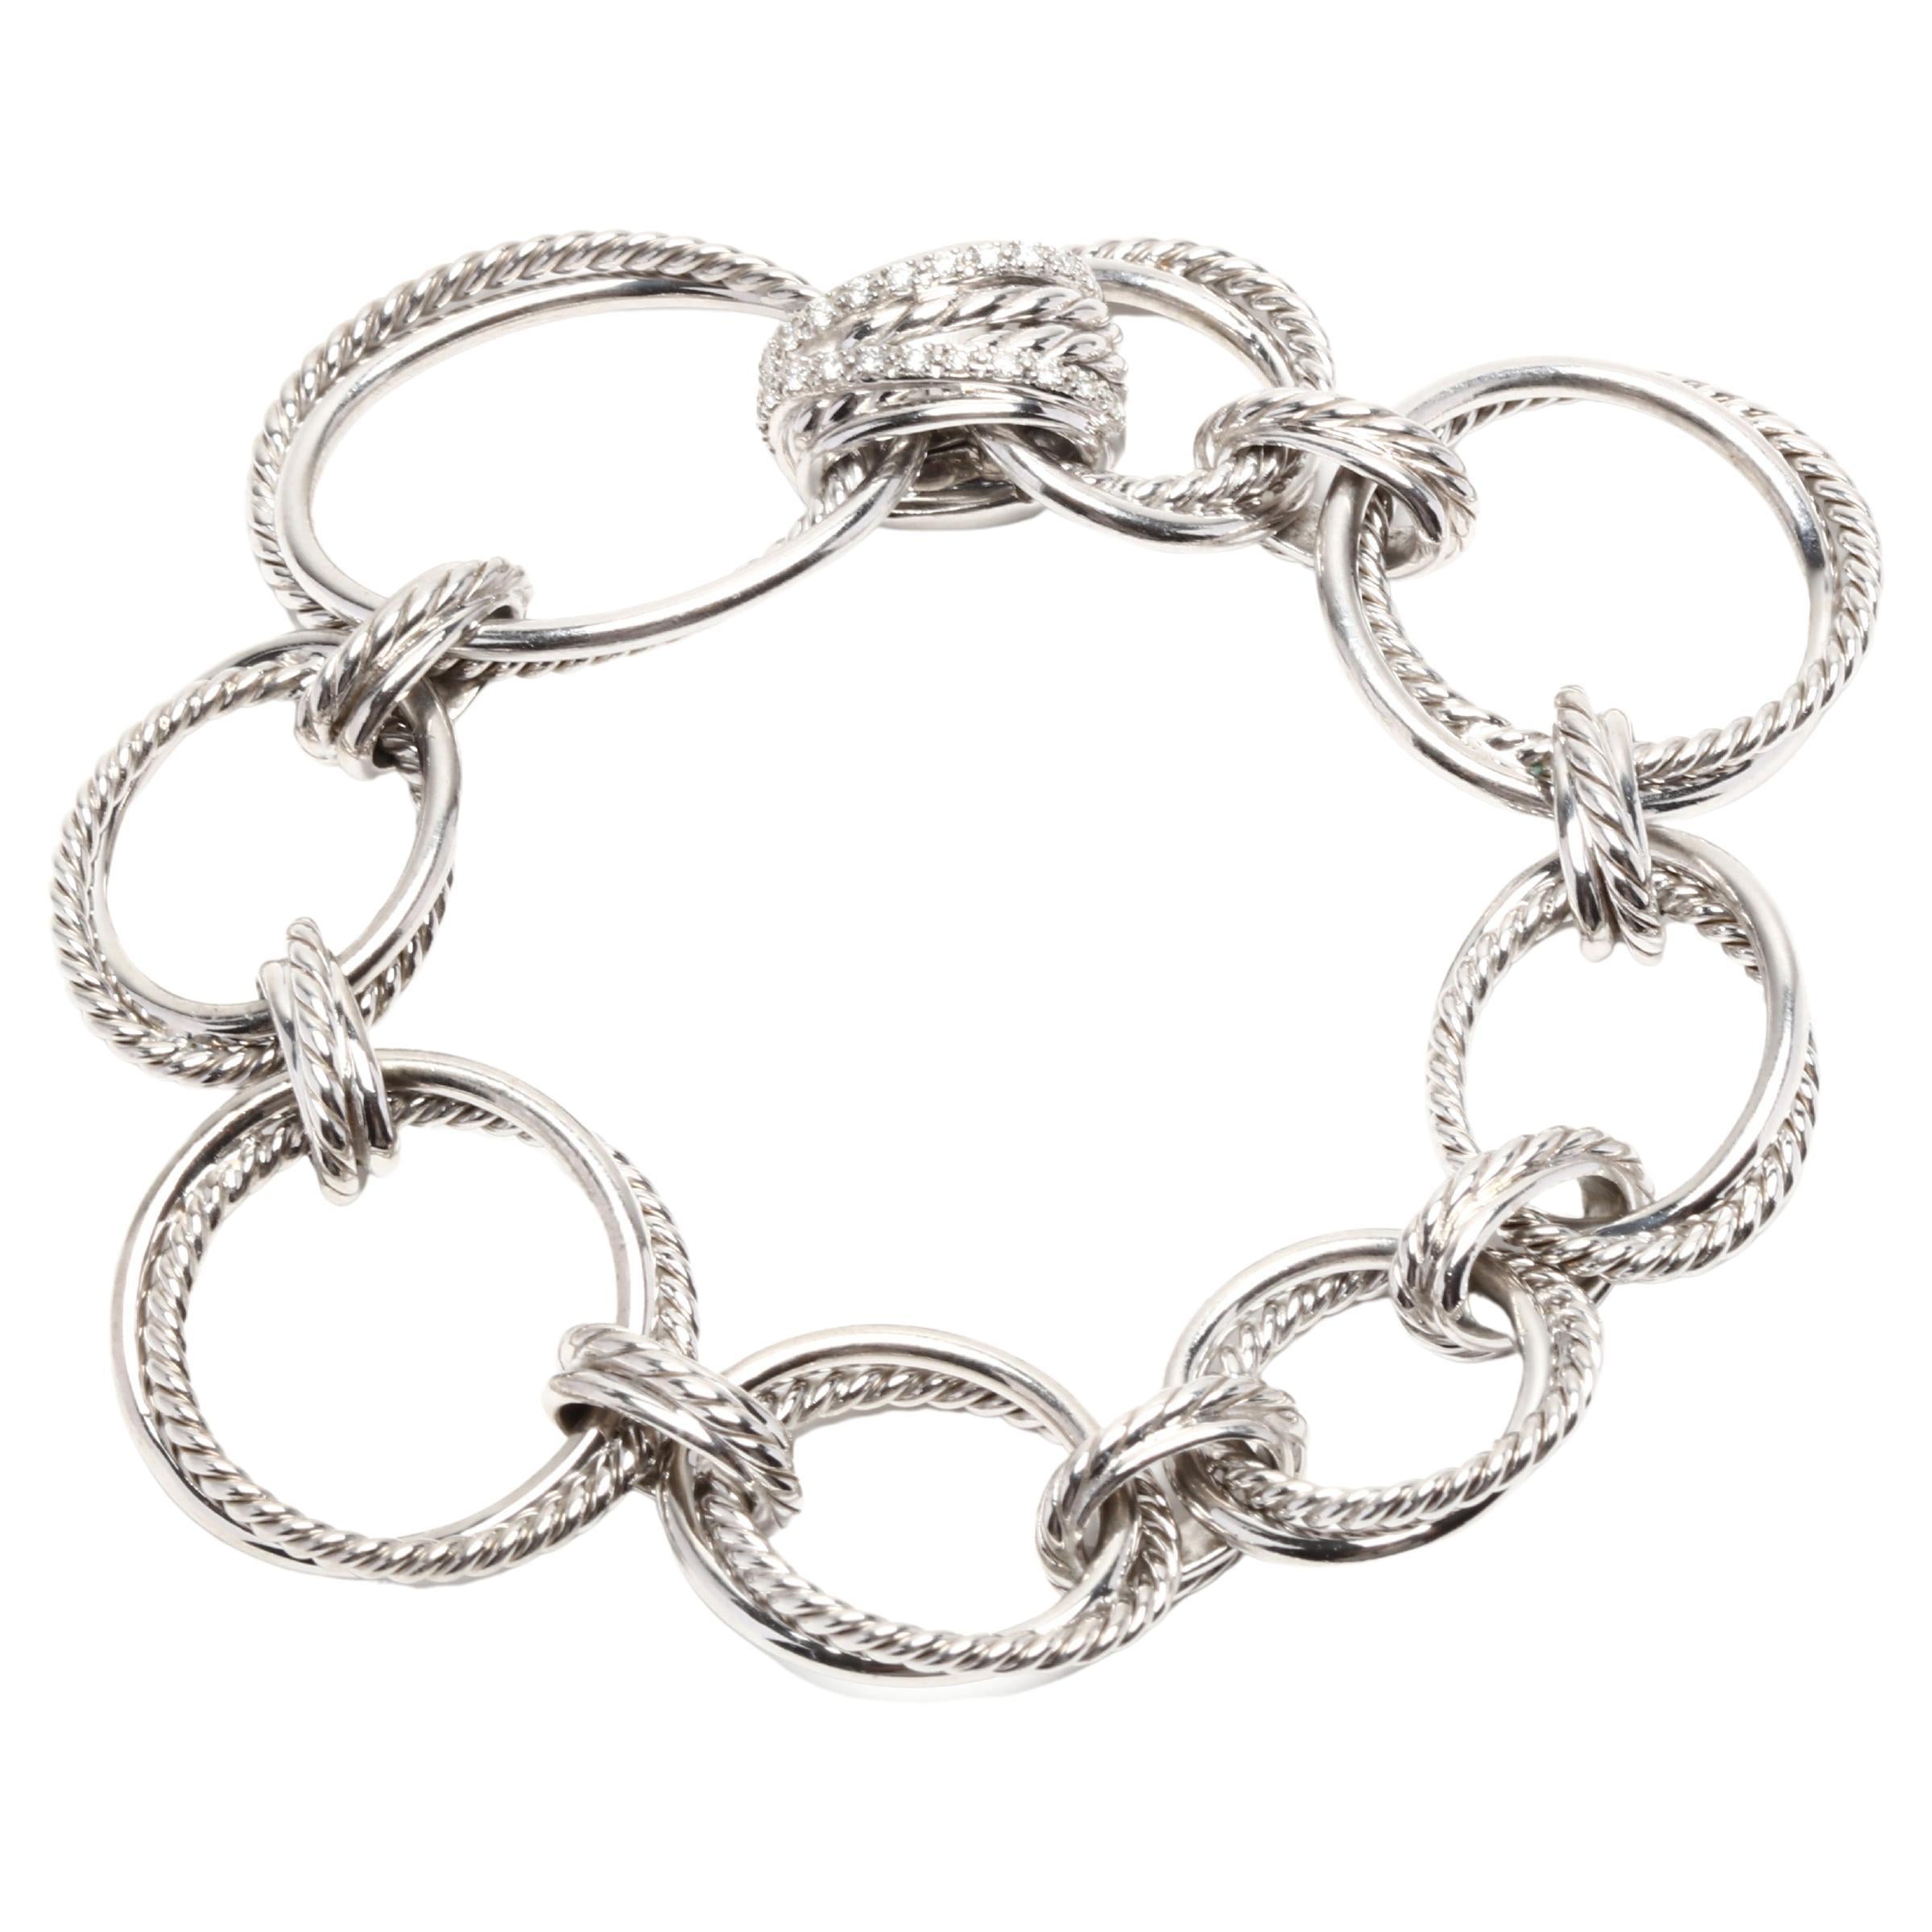 David Yurman Sterling Silver and Diamond Infinity Link Bracelet